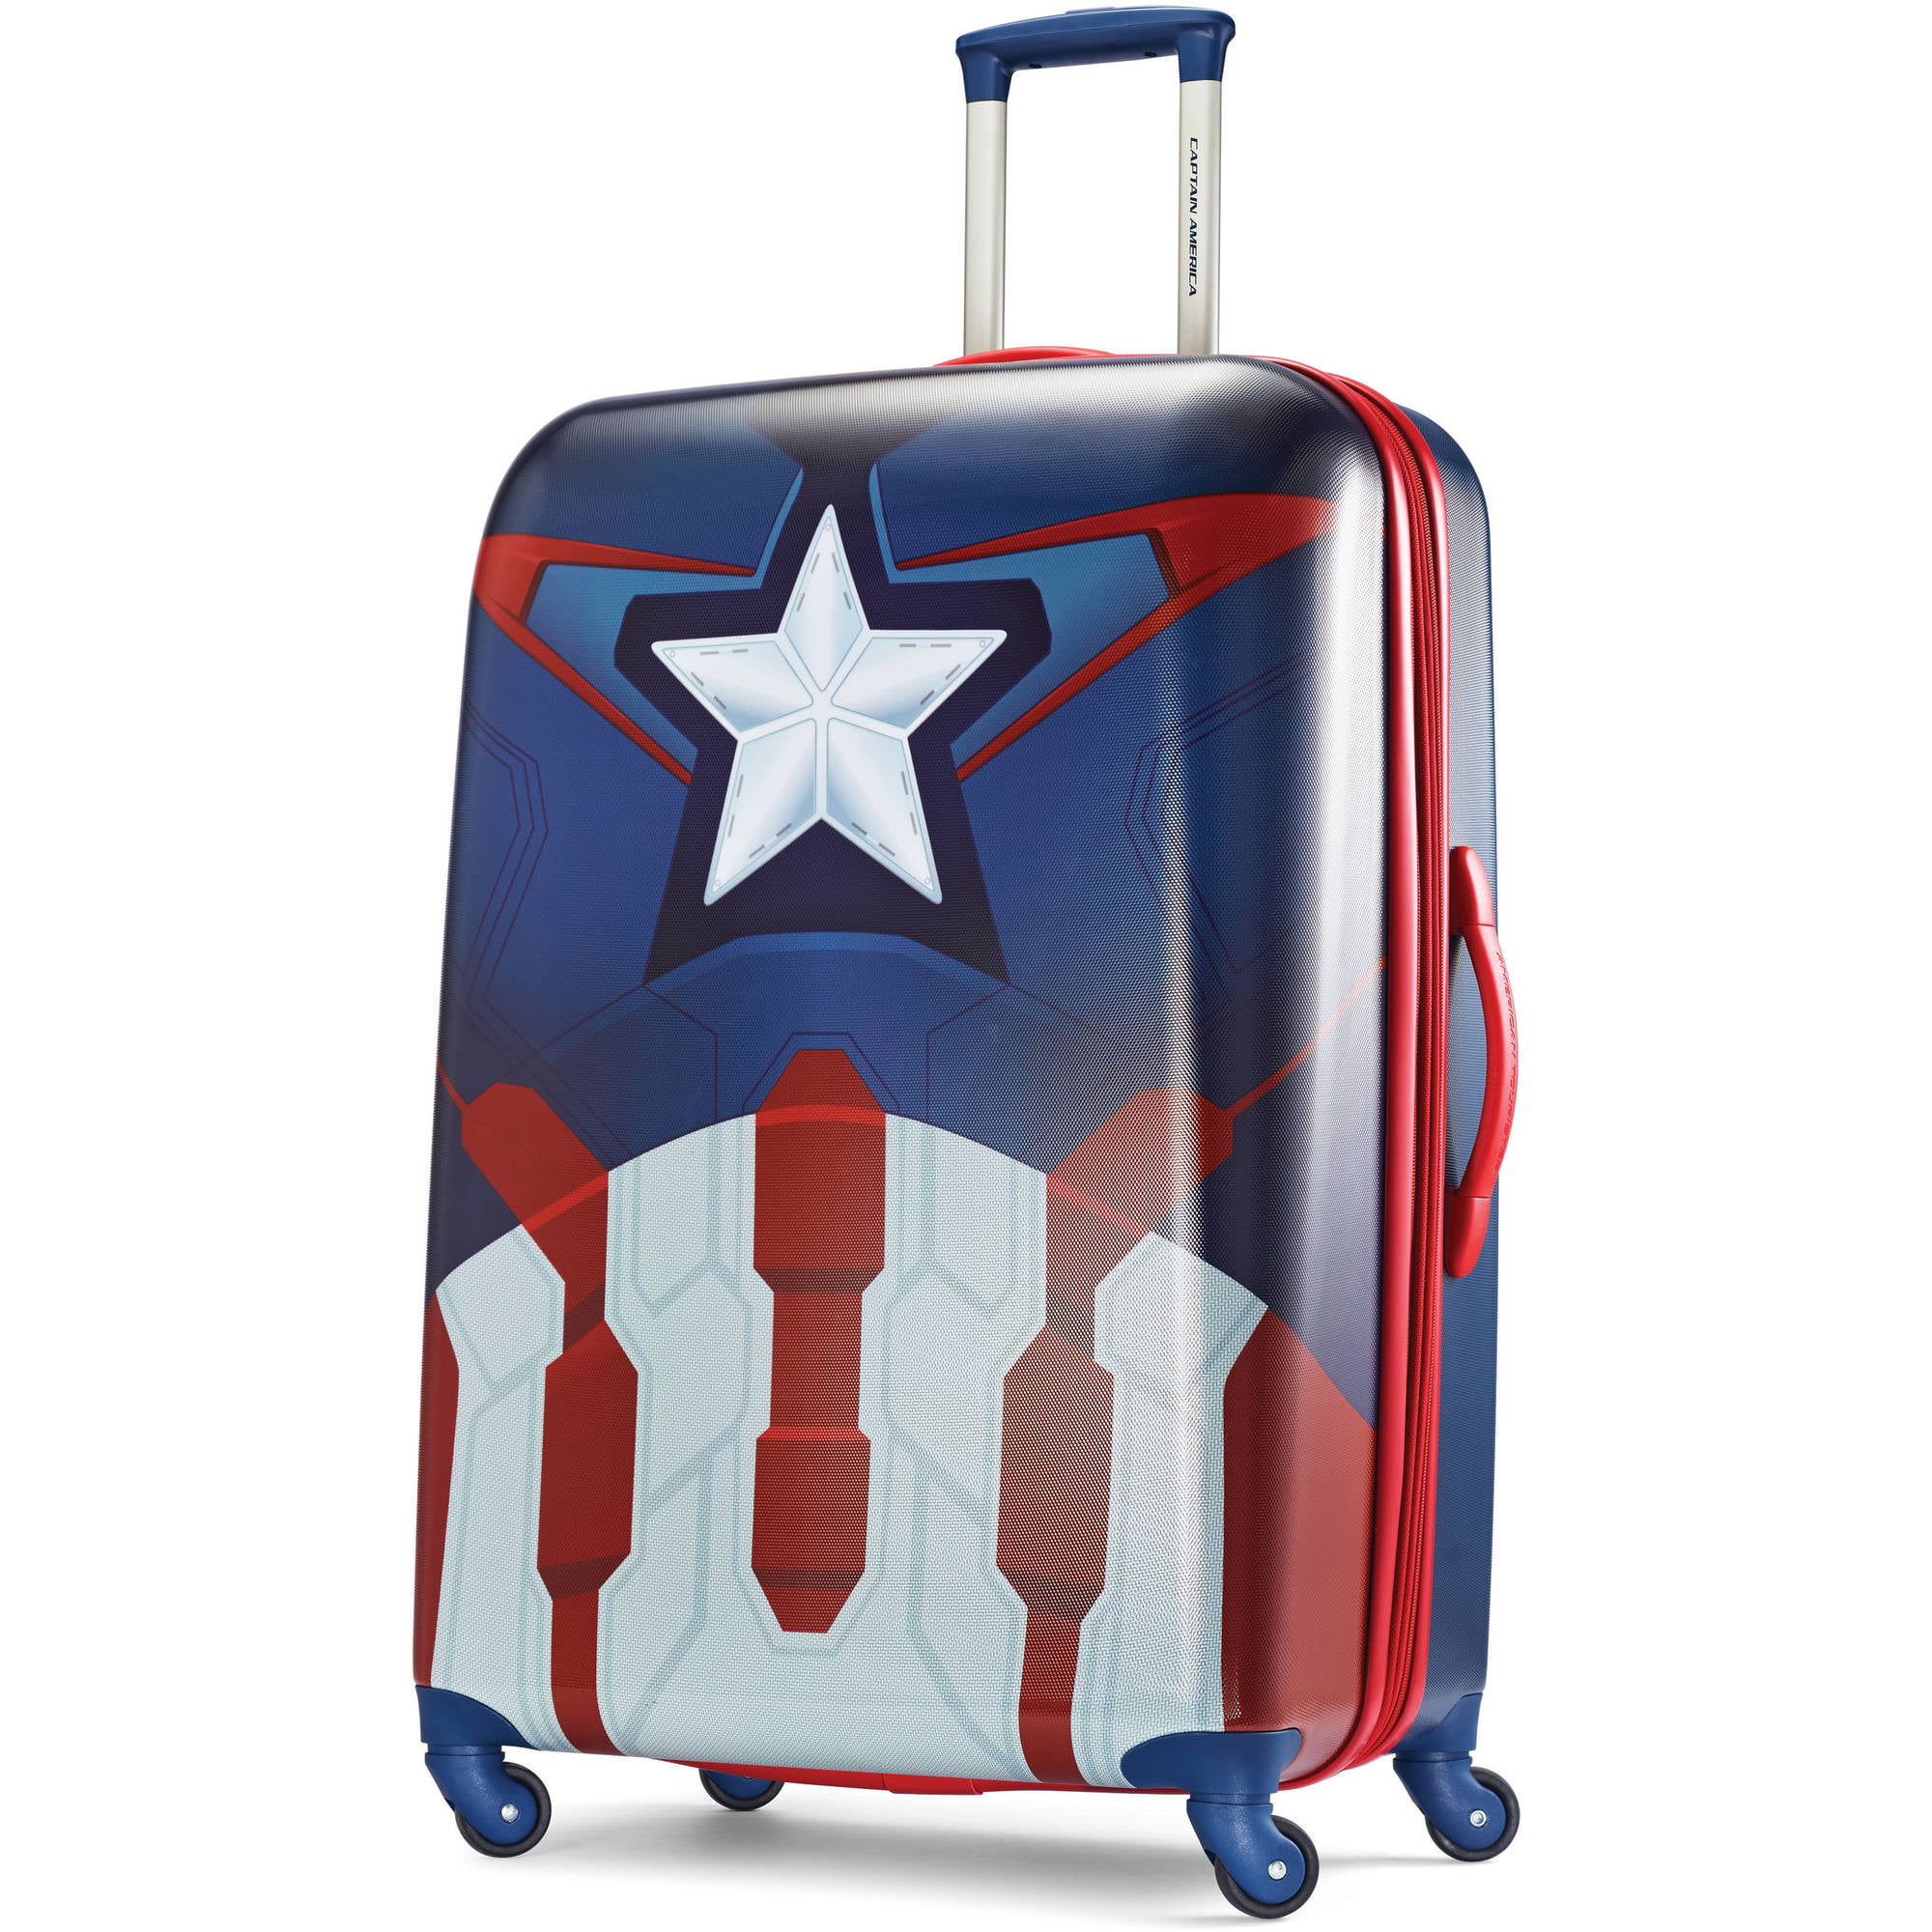 Captain America luggage Trolley Case Luggage Case Suitcase Spinner Carry-On Luggage Hardshell Exterior Sleek Boarding Bag 